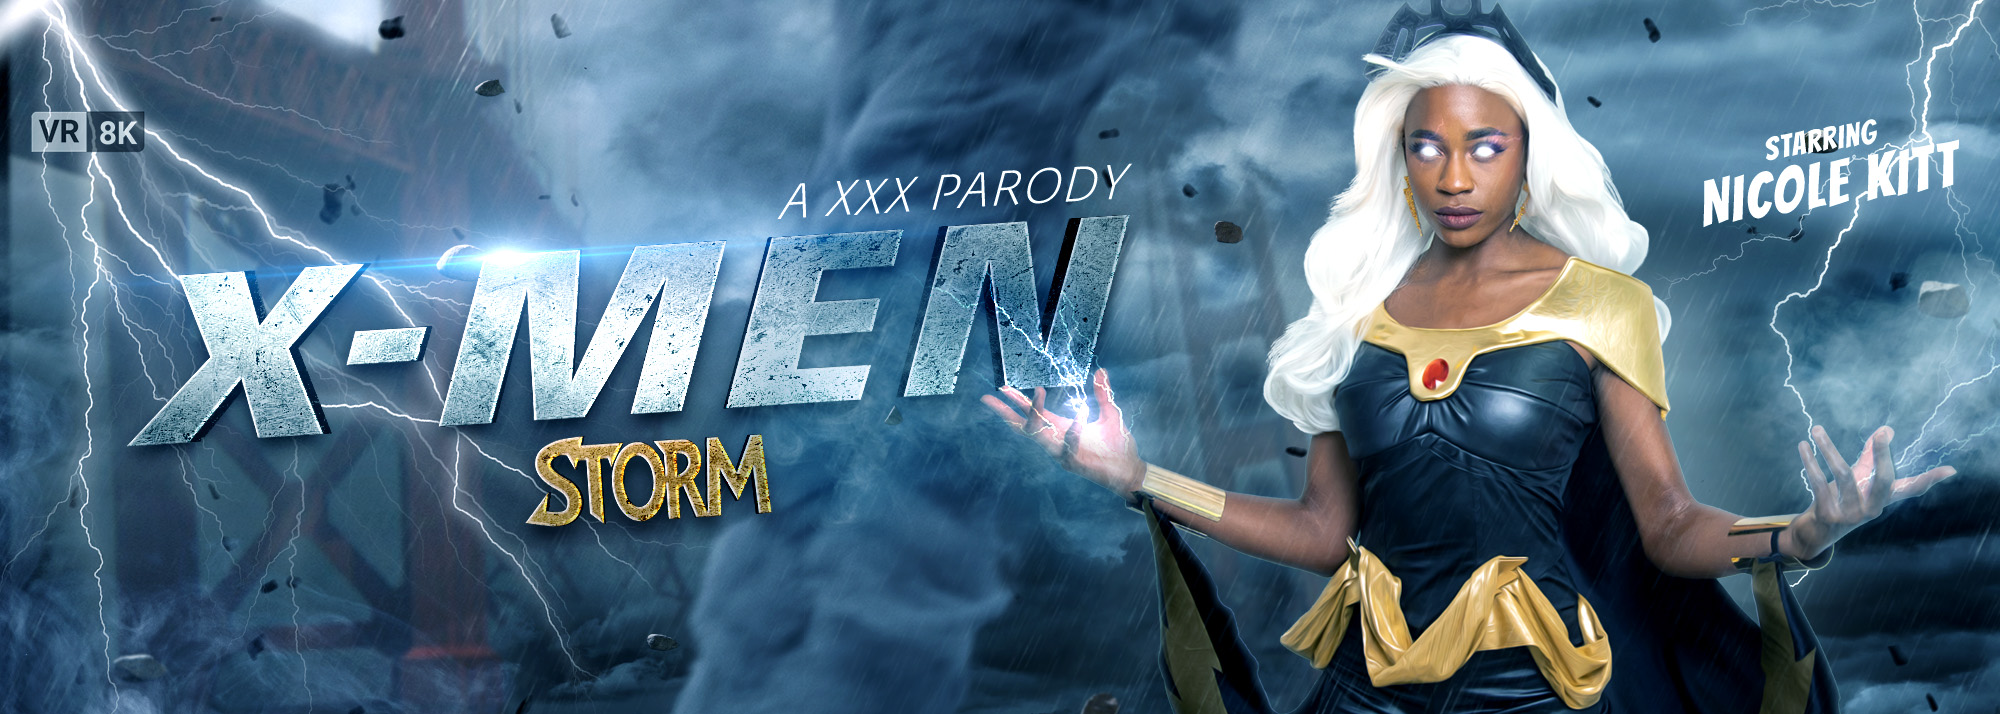 X-Men: Storm (A XXX Parody) - VR Porn Video, Starring Nicole Kitt VR